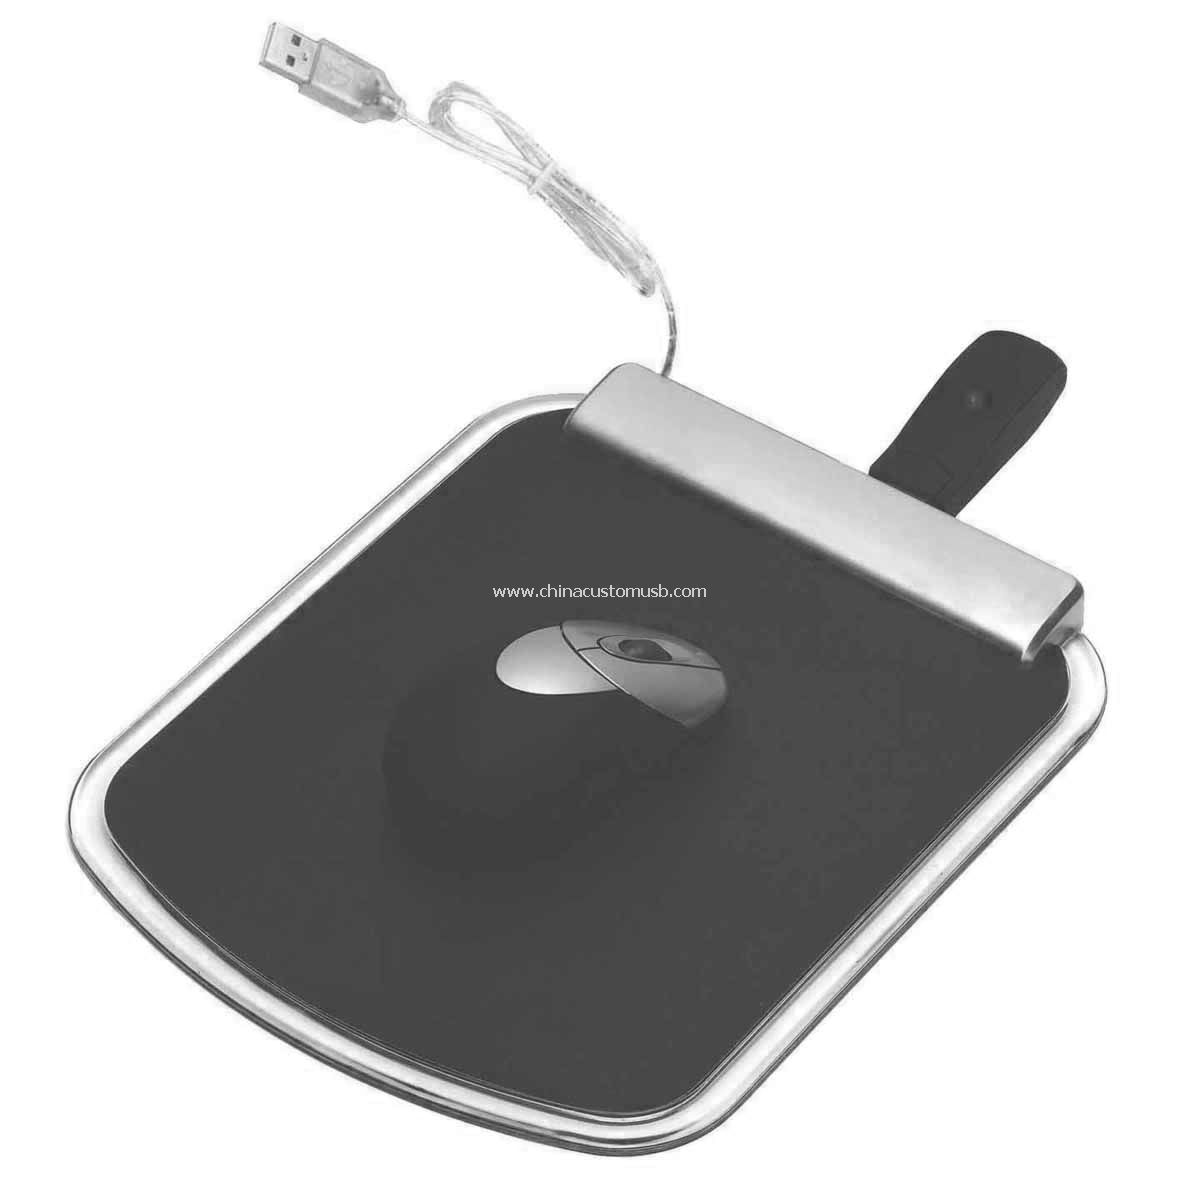 USB Hub with Mouse Pad